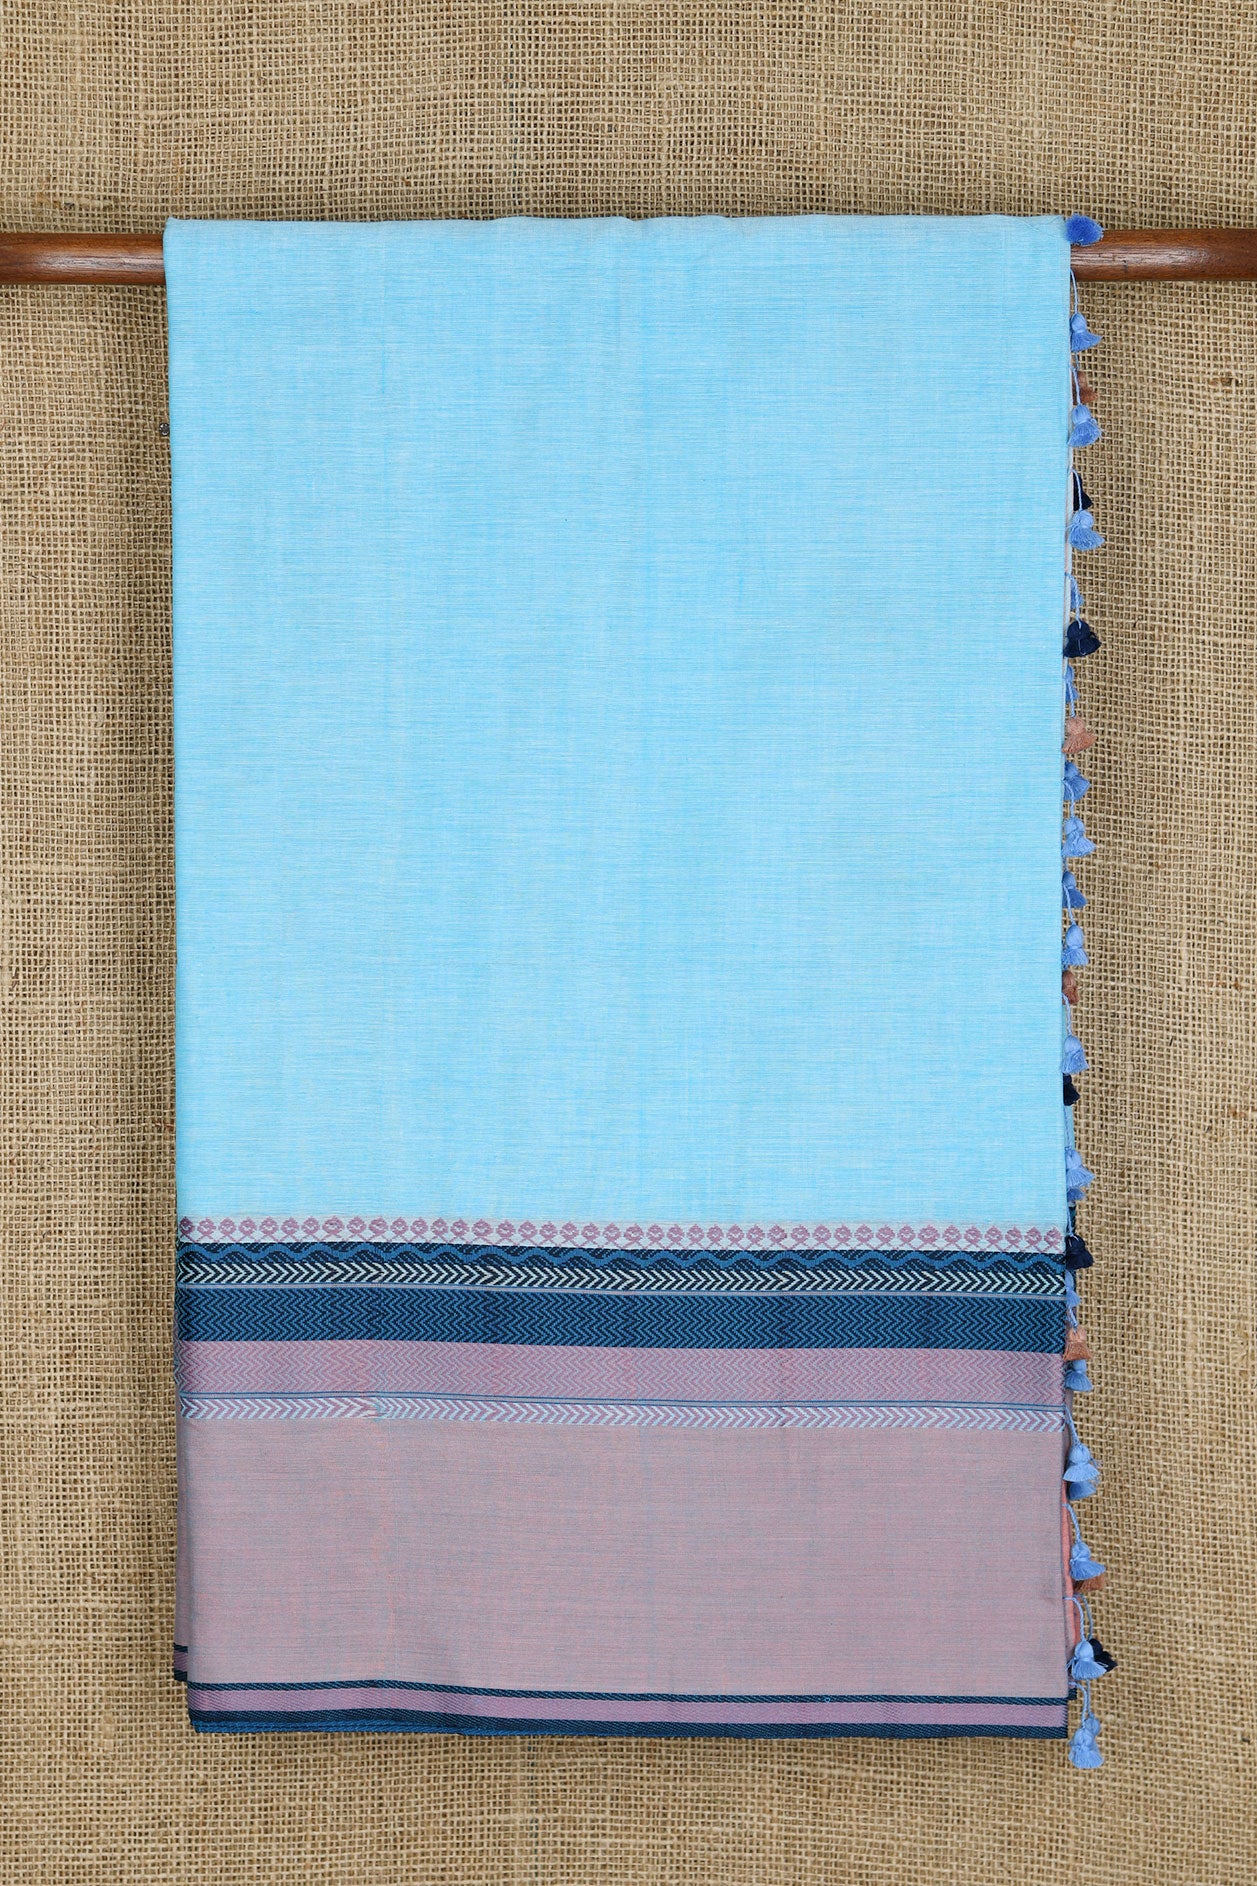 Big Thread Work Border In Plain Pastel Blue Bengal Cotton Saree